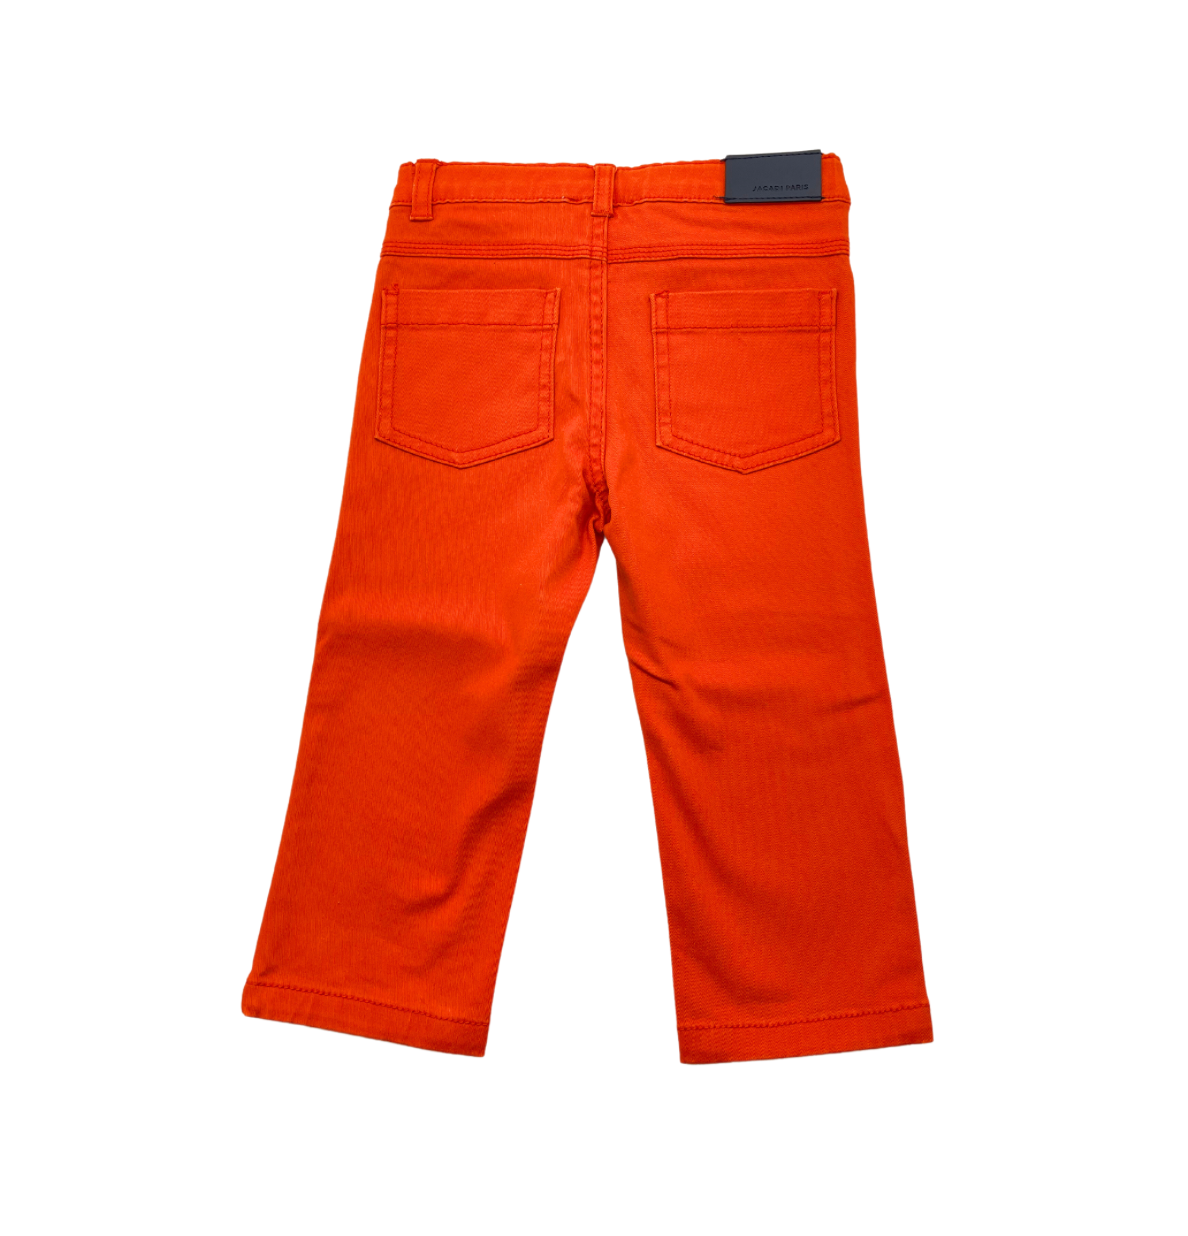 JACADI - Pantalon orange - 18 mois